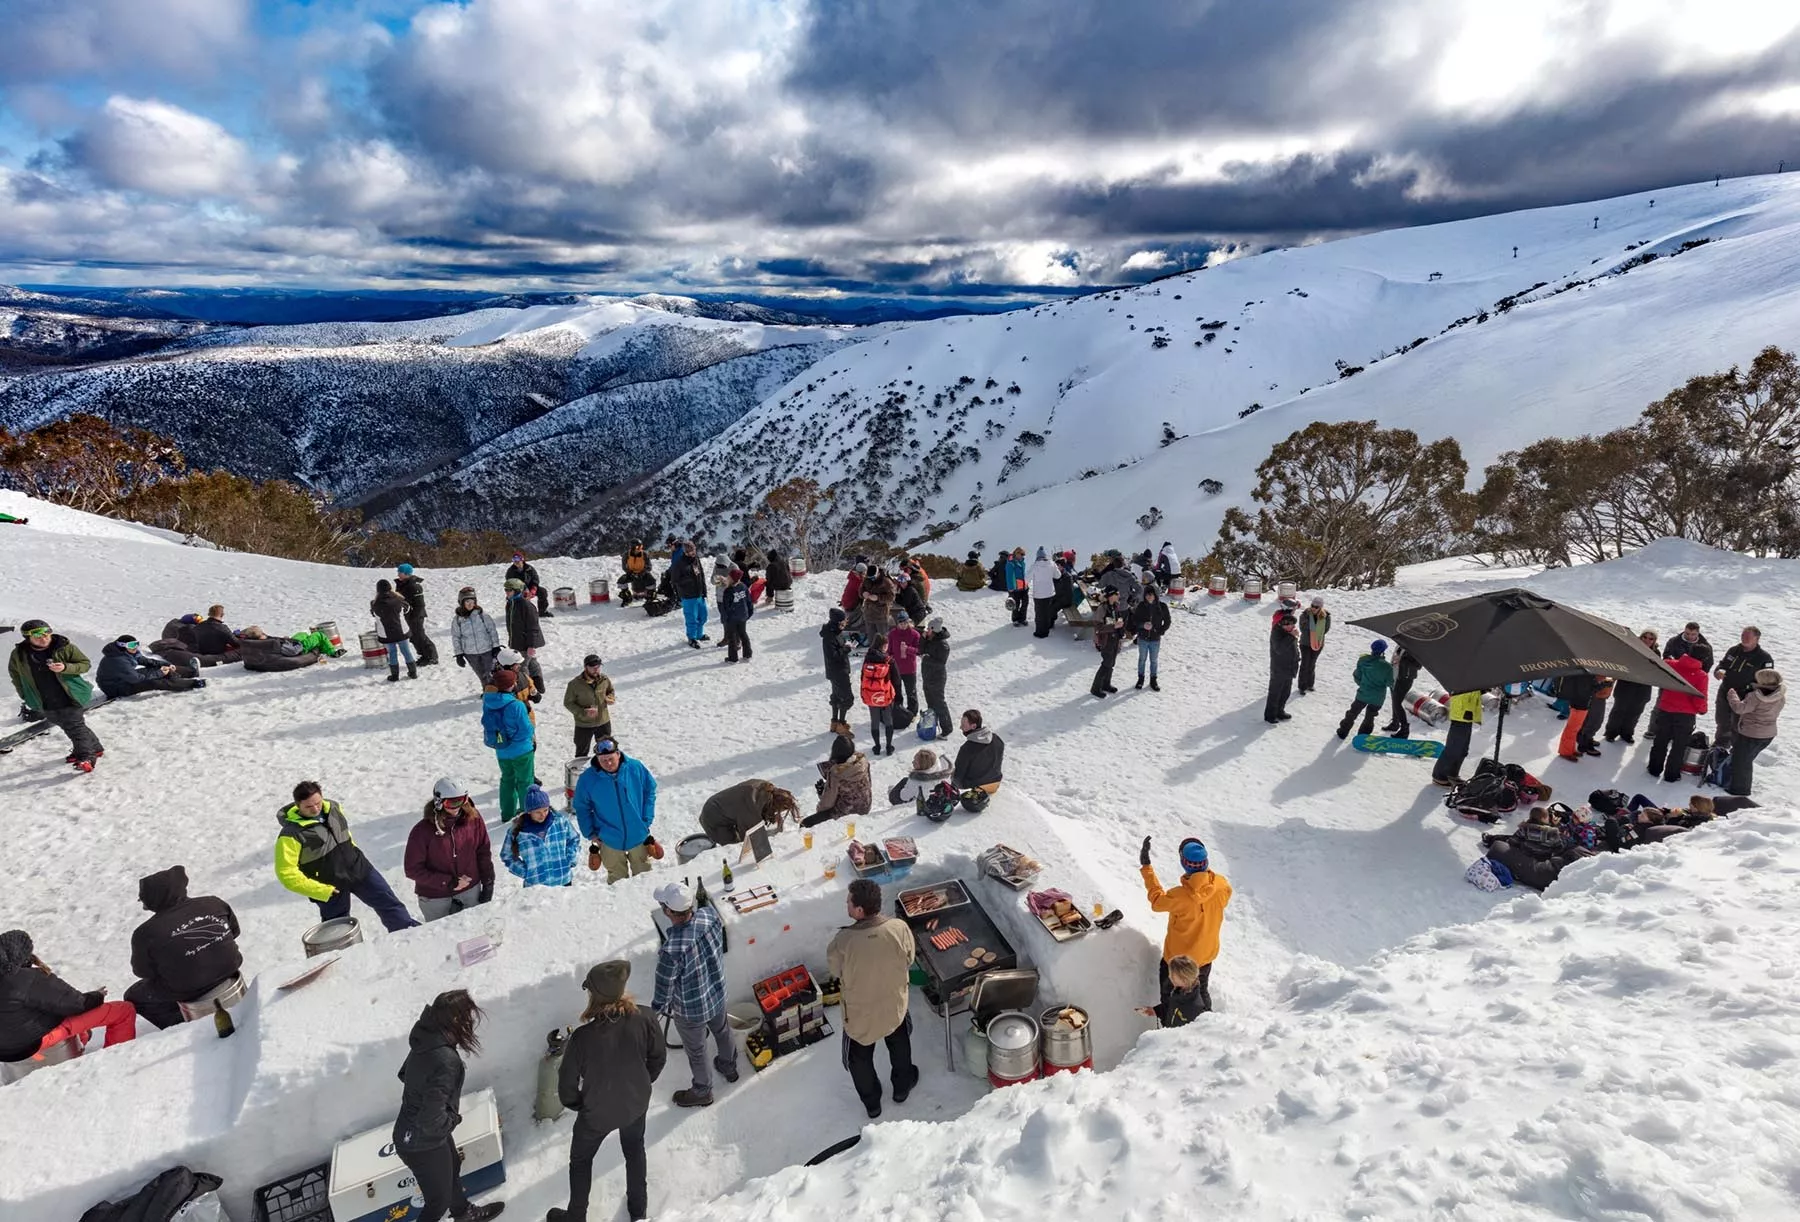 Hotham Alpine Resort in Australia, Australia and Oceania | Snowboarding,Skiing - Rated 3.9